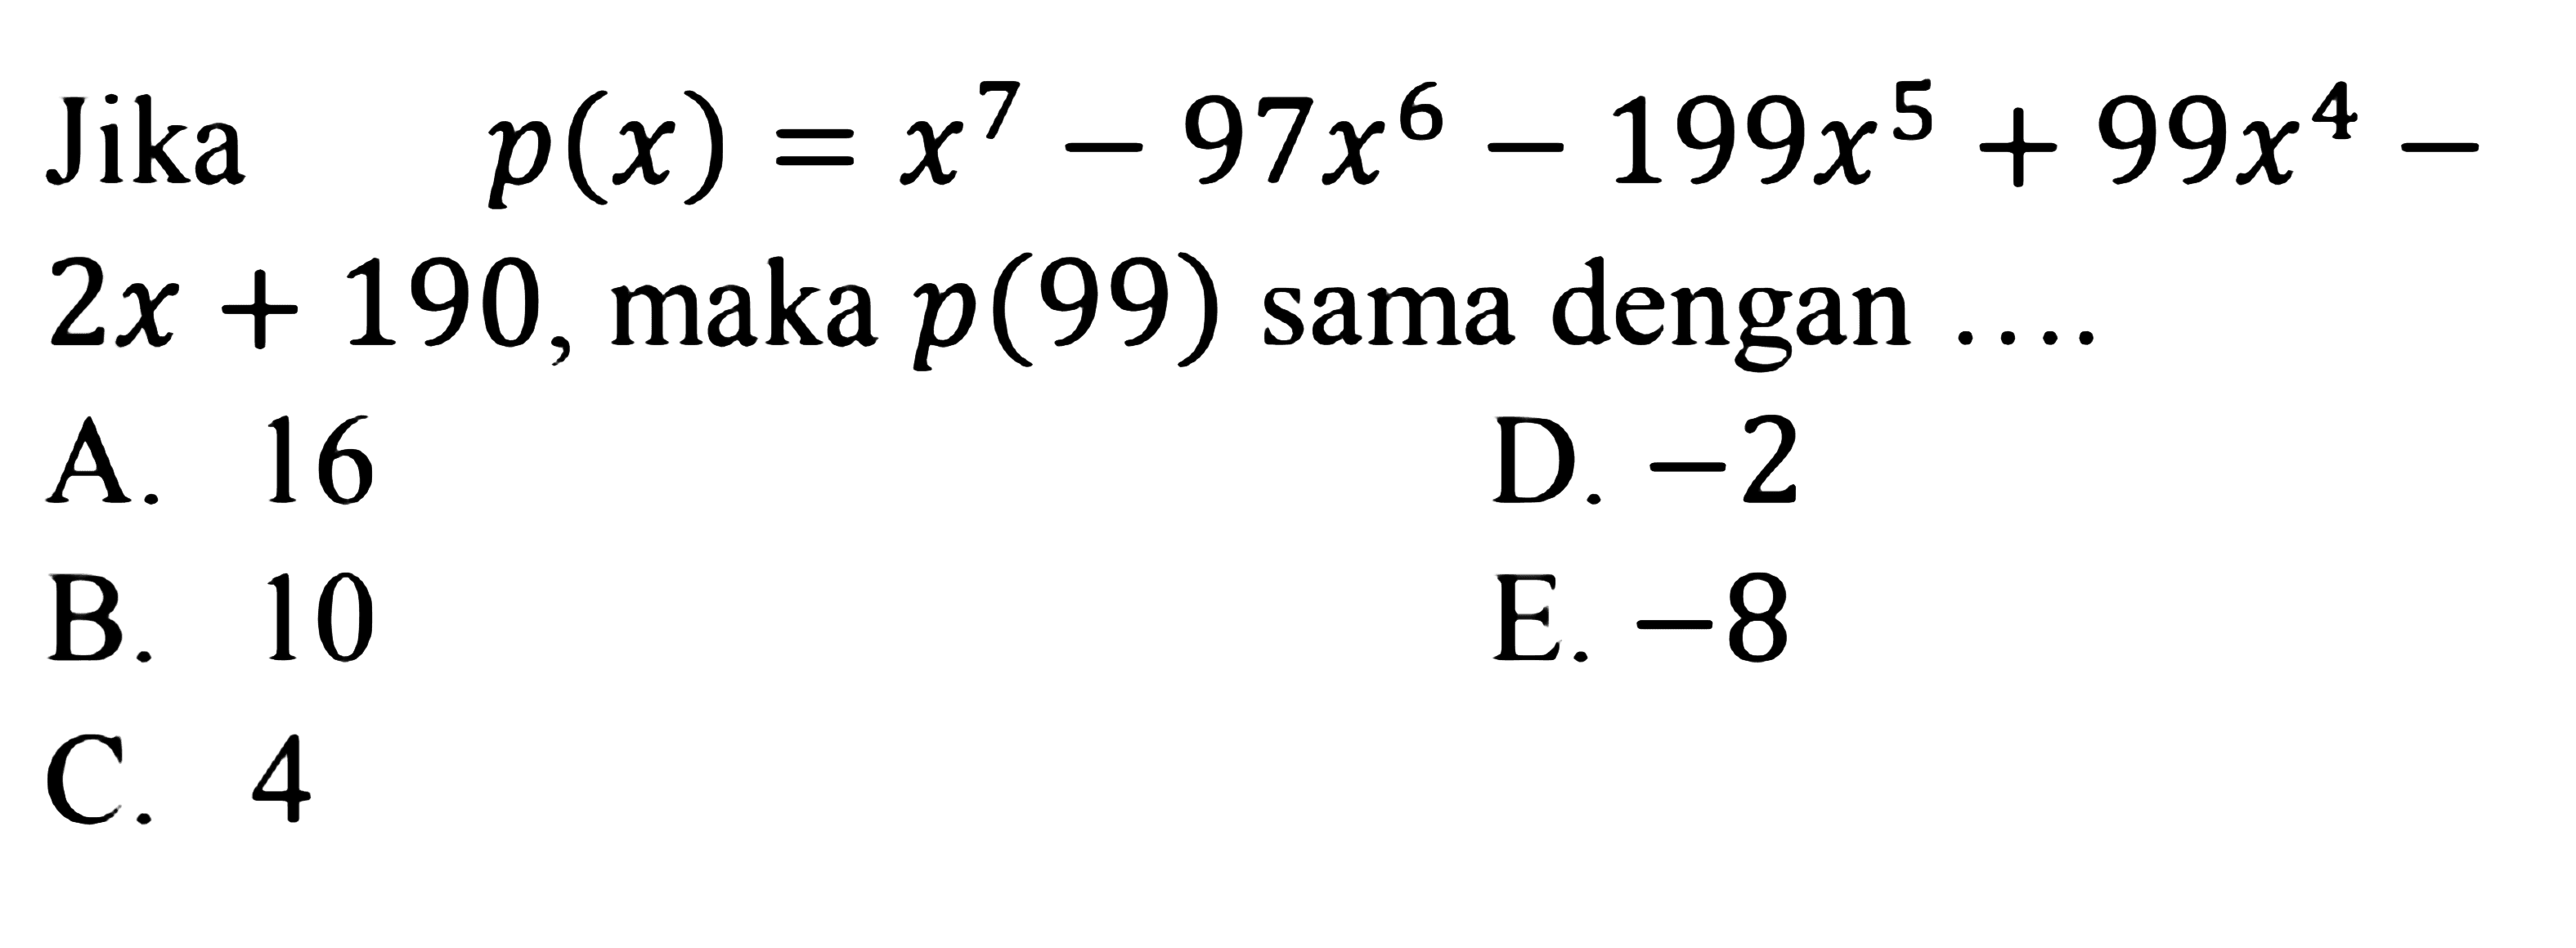 Jika   p(x)=x^7-97x^6-199x^5+99x^4-2x+190 , maka  p(99)  sama dengan ....